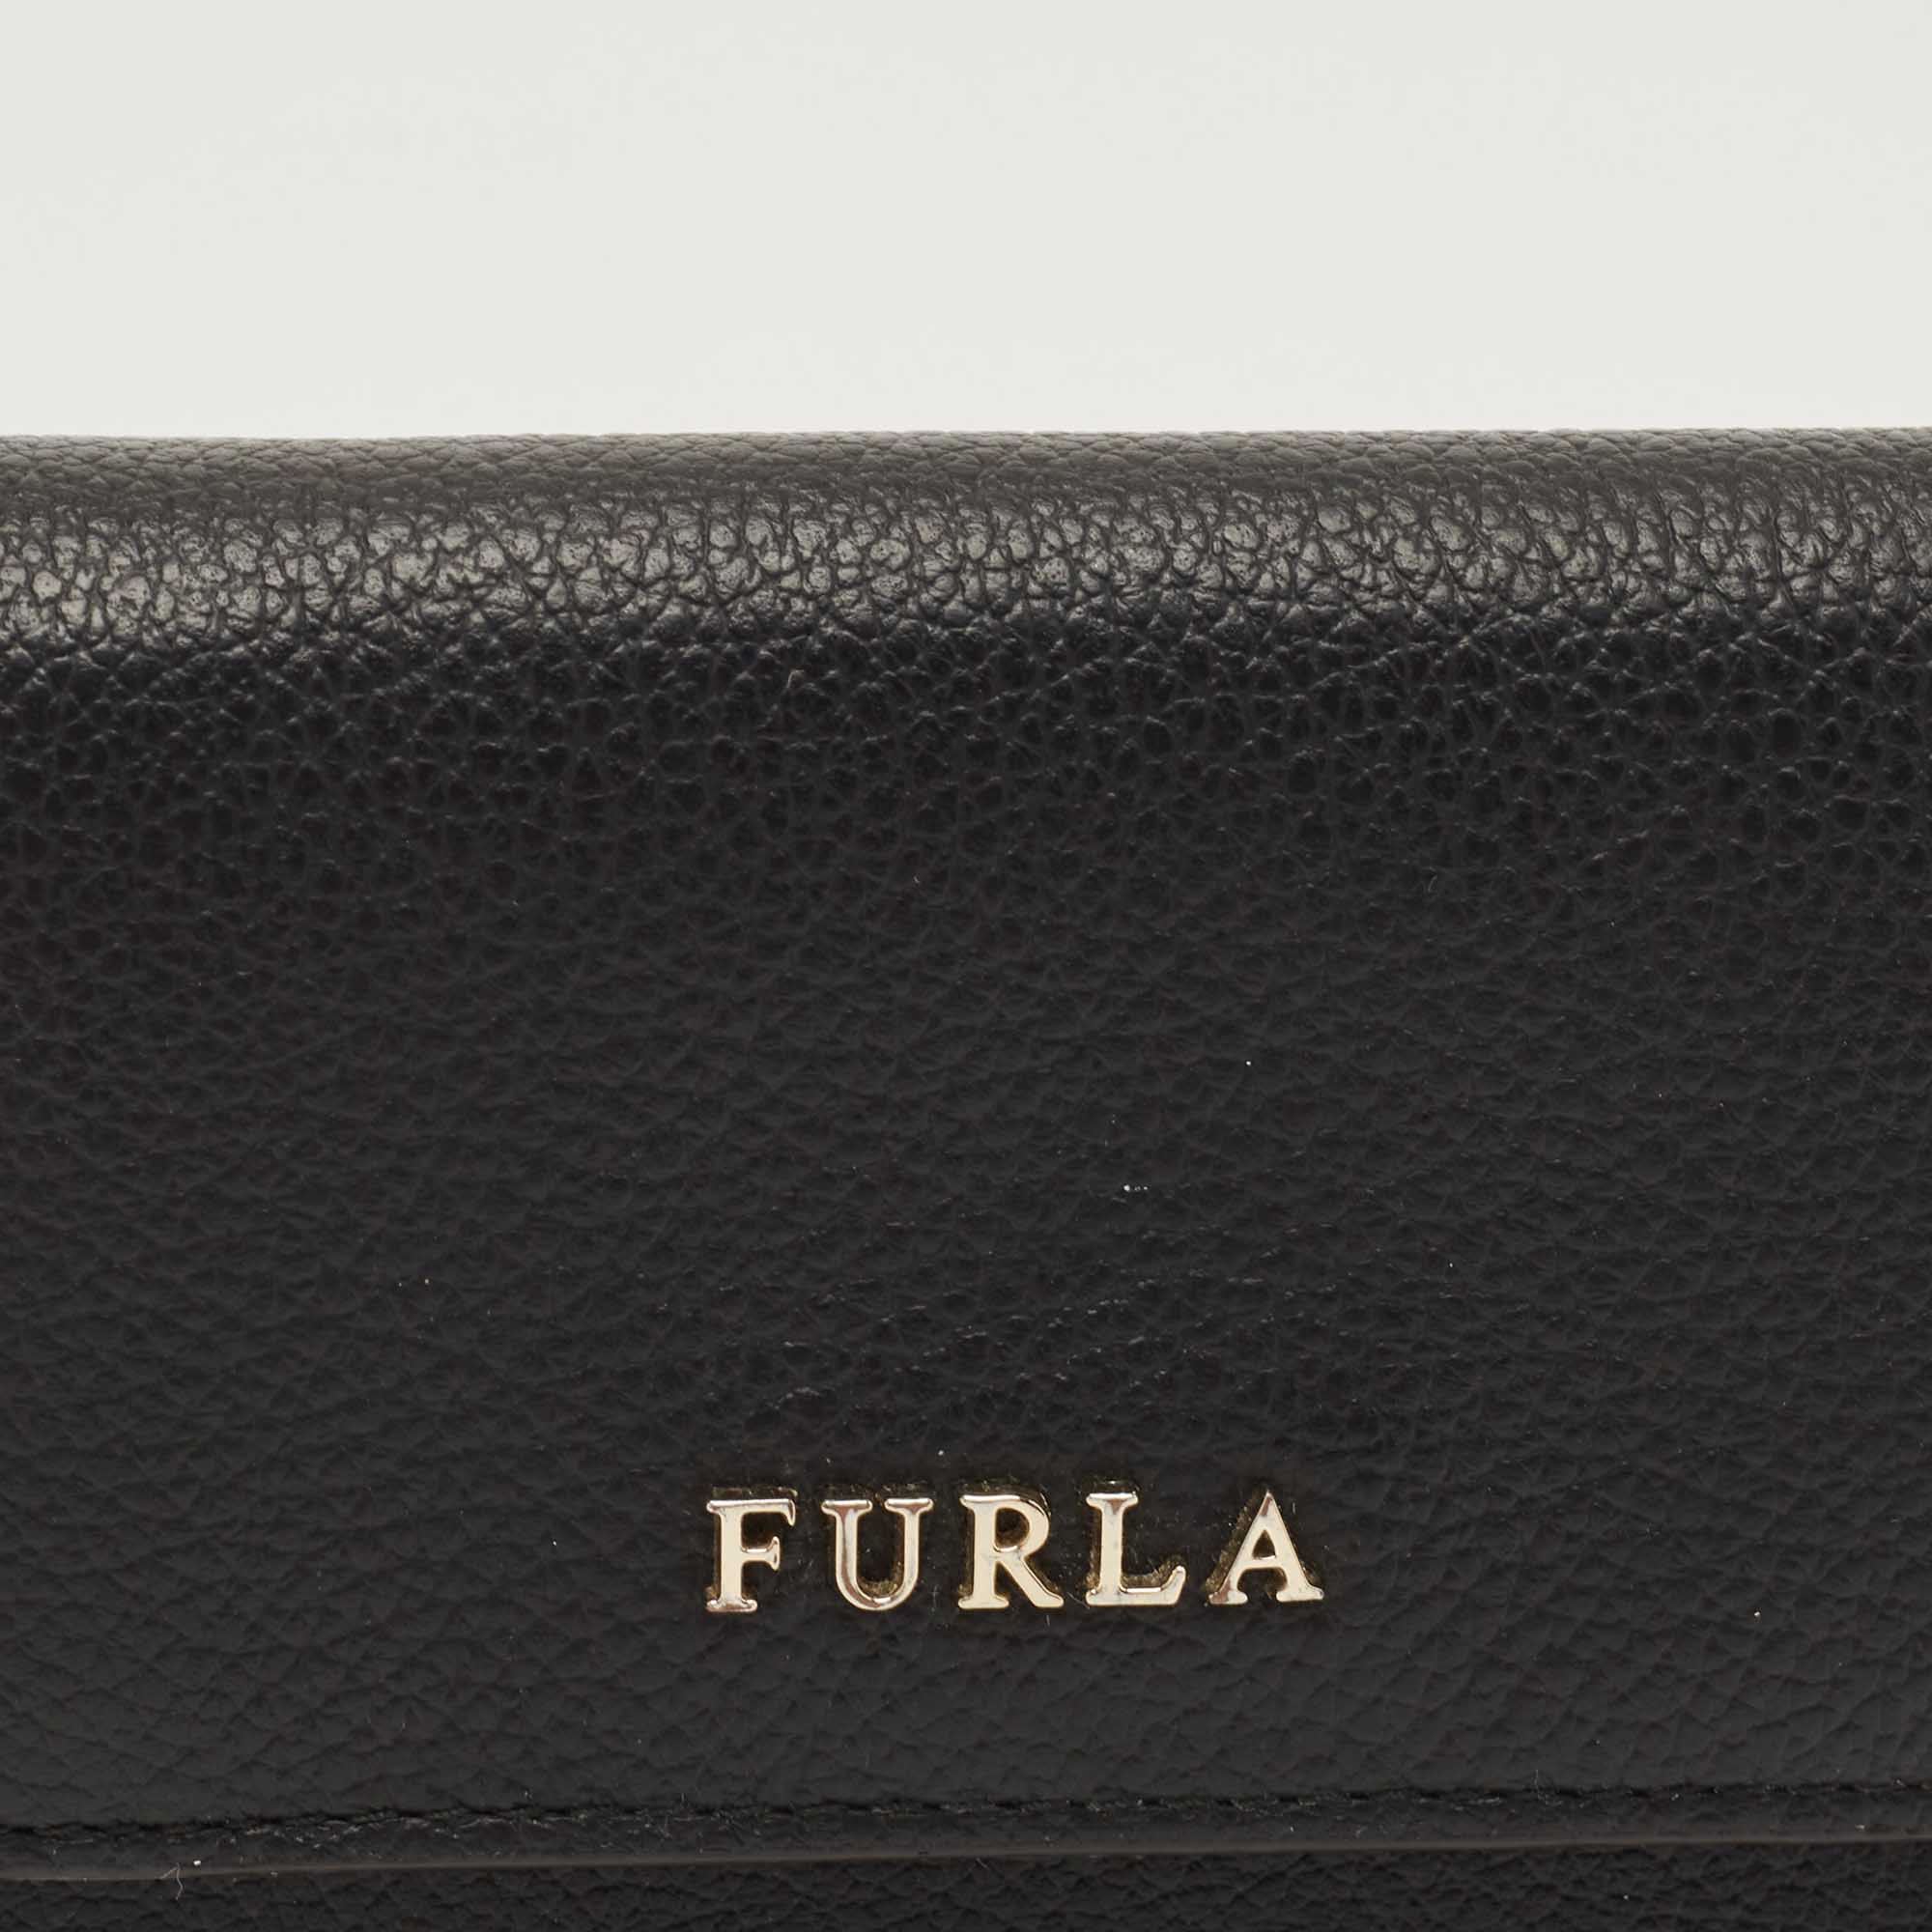 Furla Black Leather Logo French Wallet